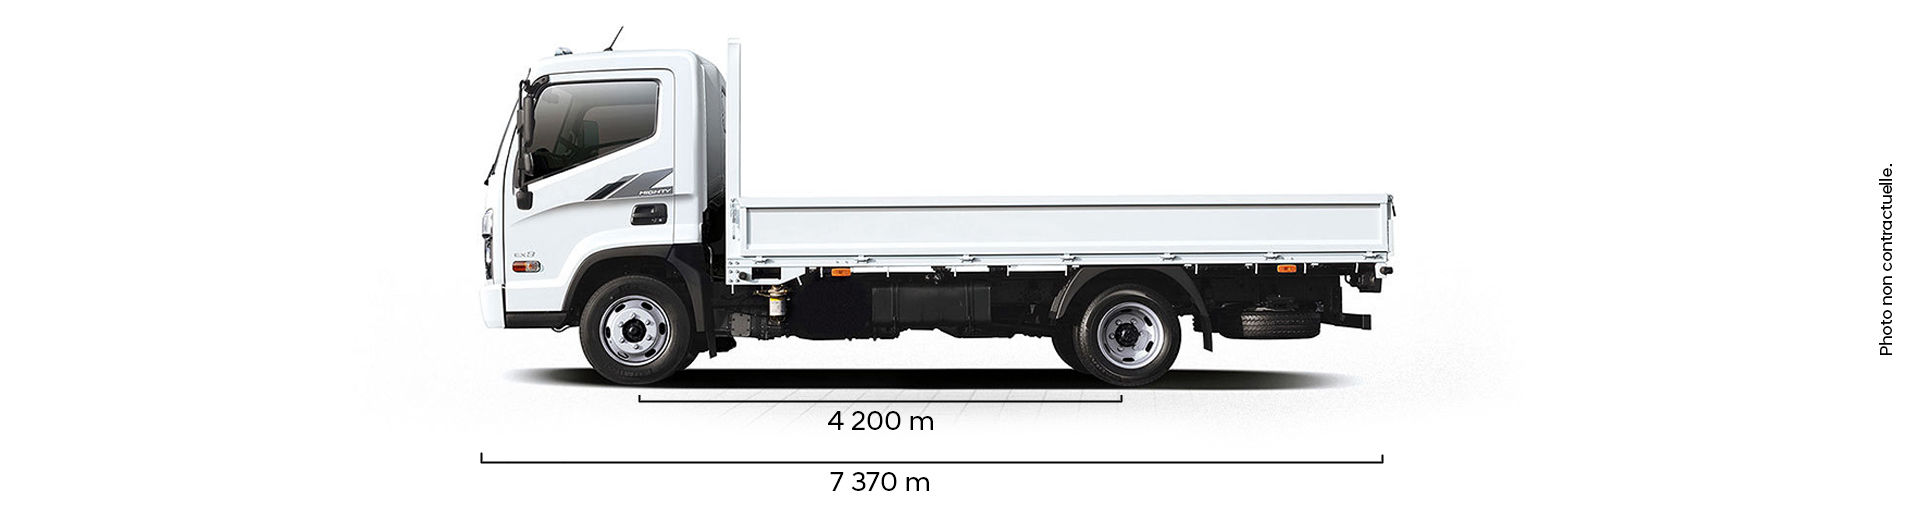 camion hyundai